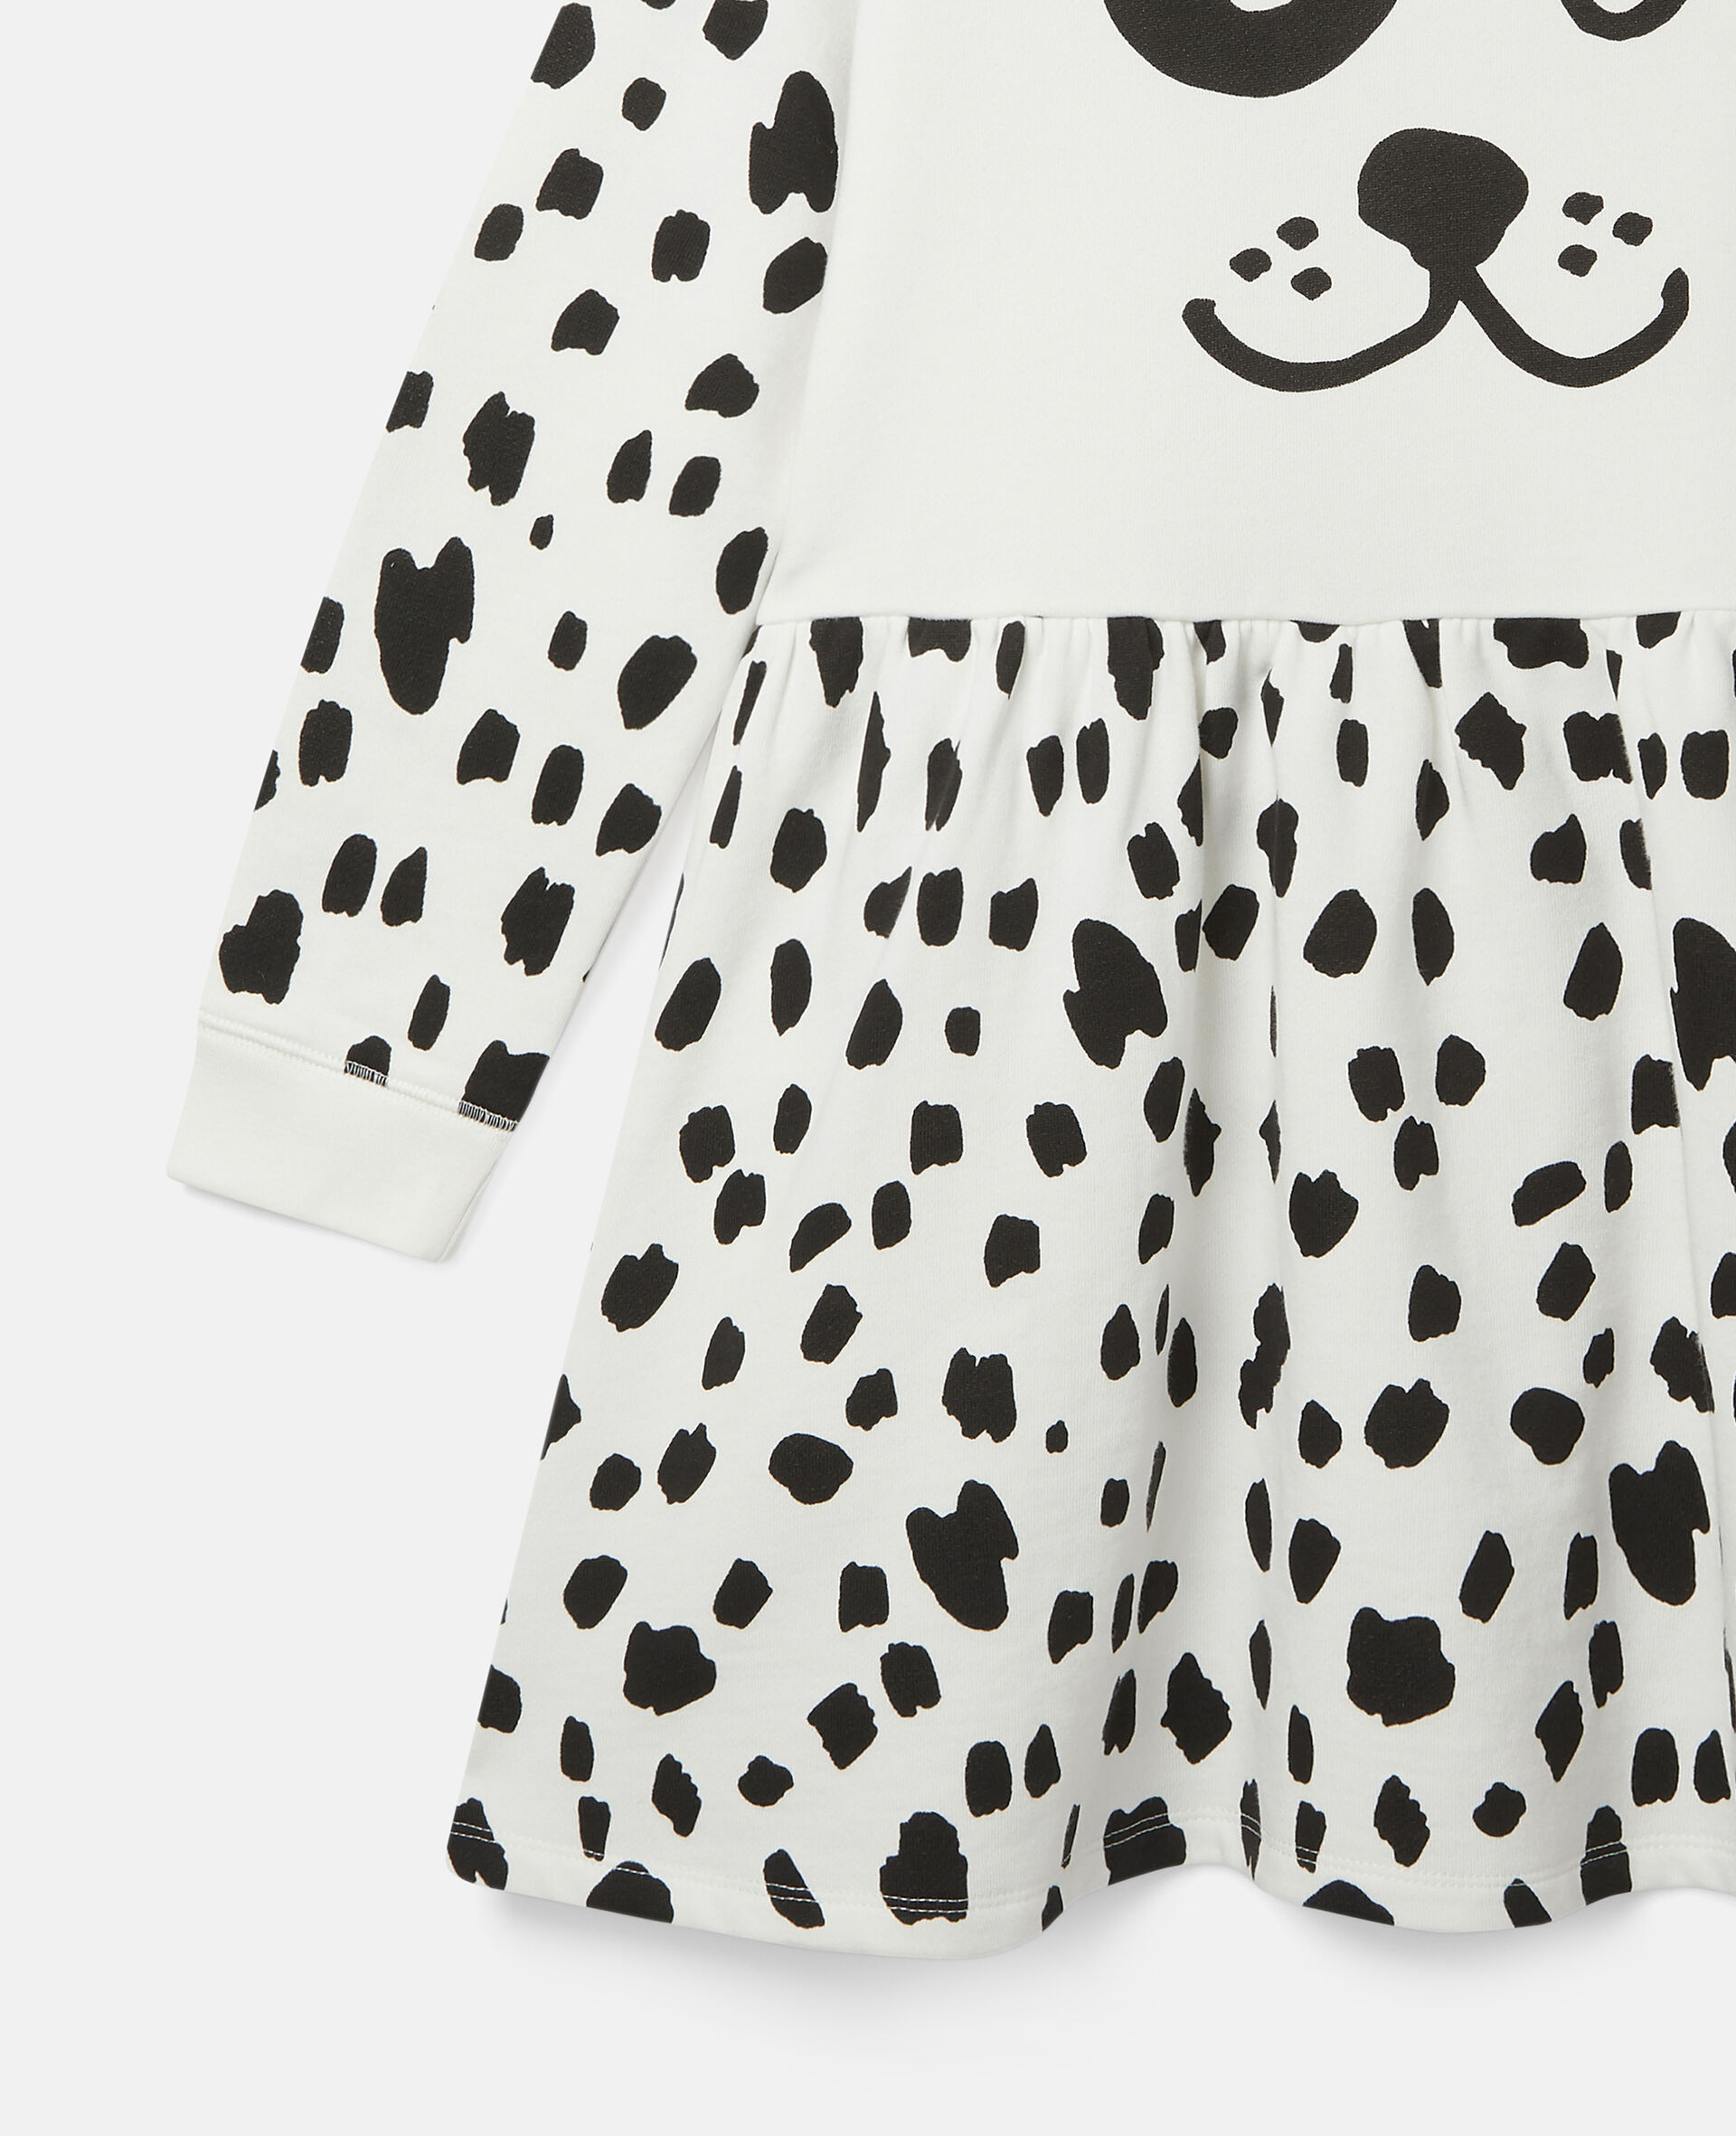 Dalmatian Spots Fleece Dress-White-large image number 1